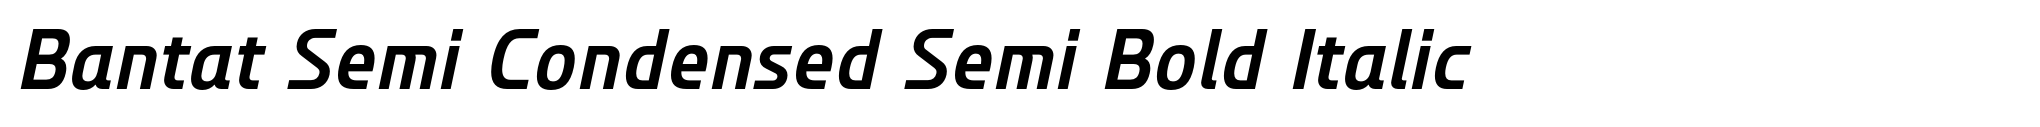 Bantat Semi Condensed Semi Bold Italic image